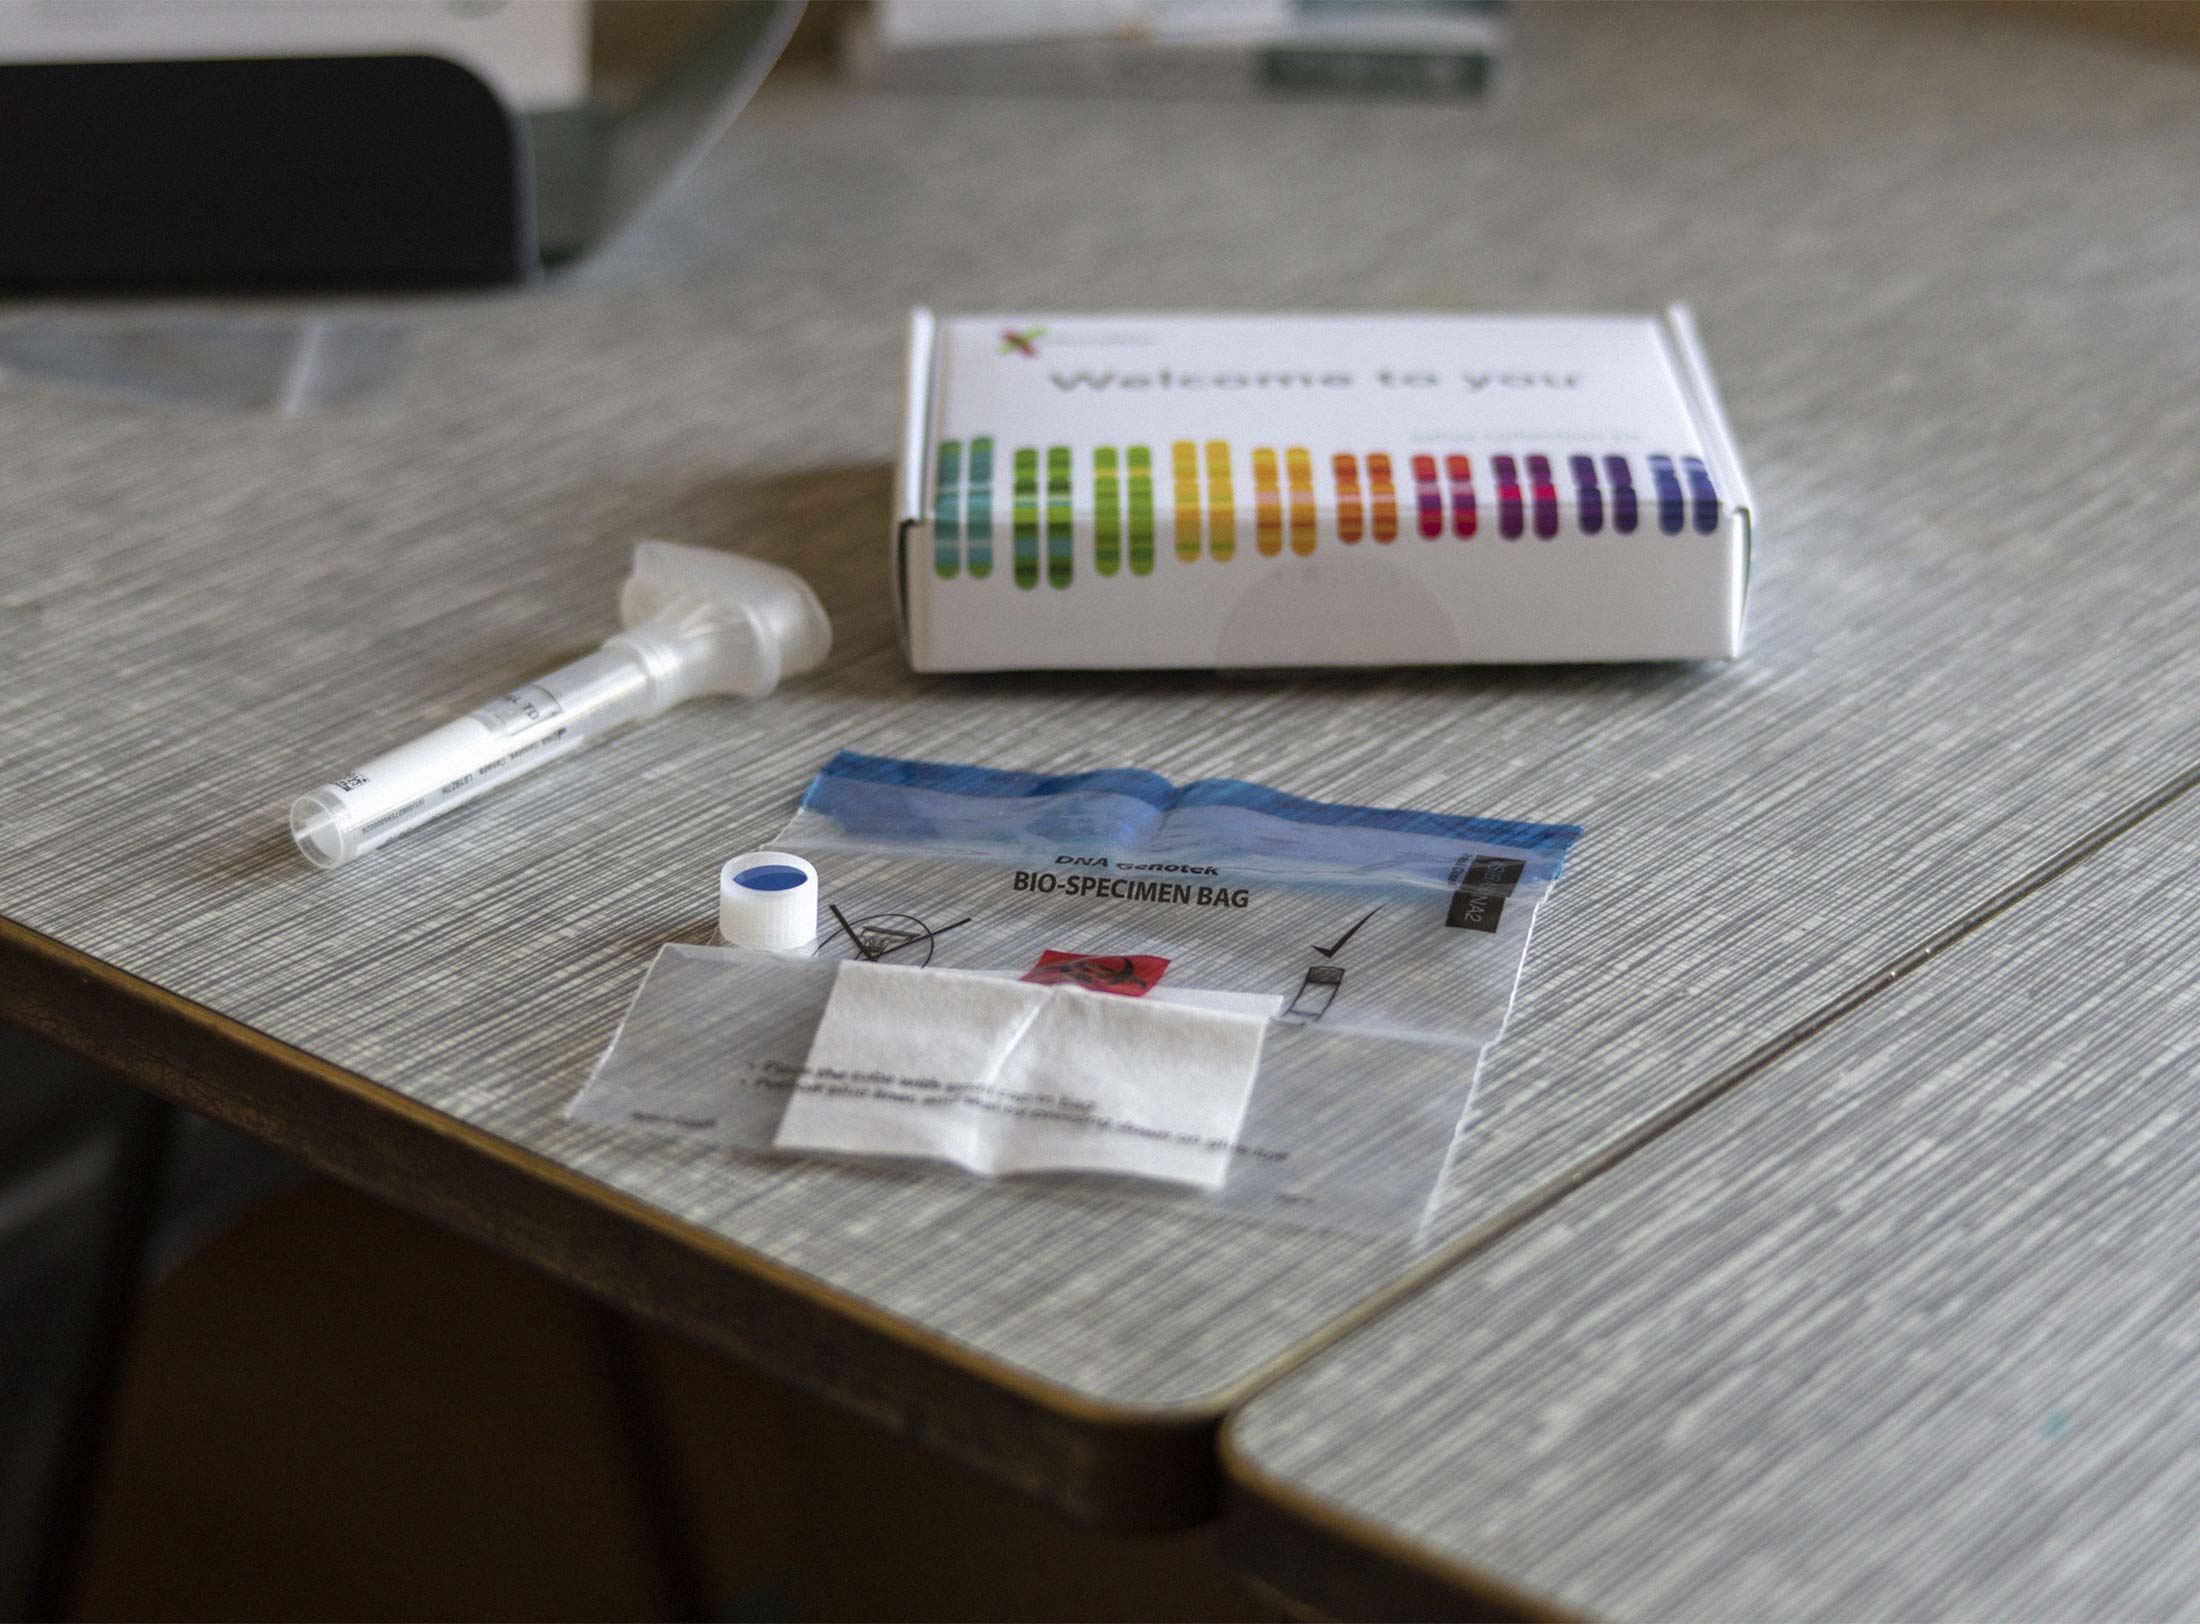 A 23andMe Inc. DNA genetic testing kit.